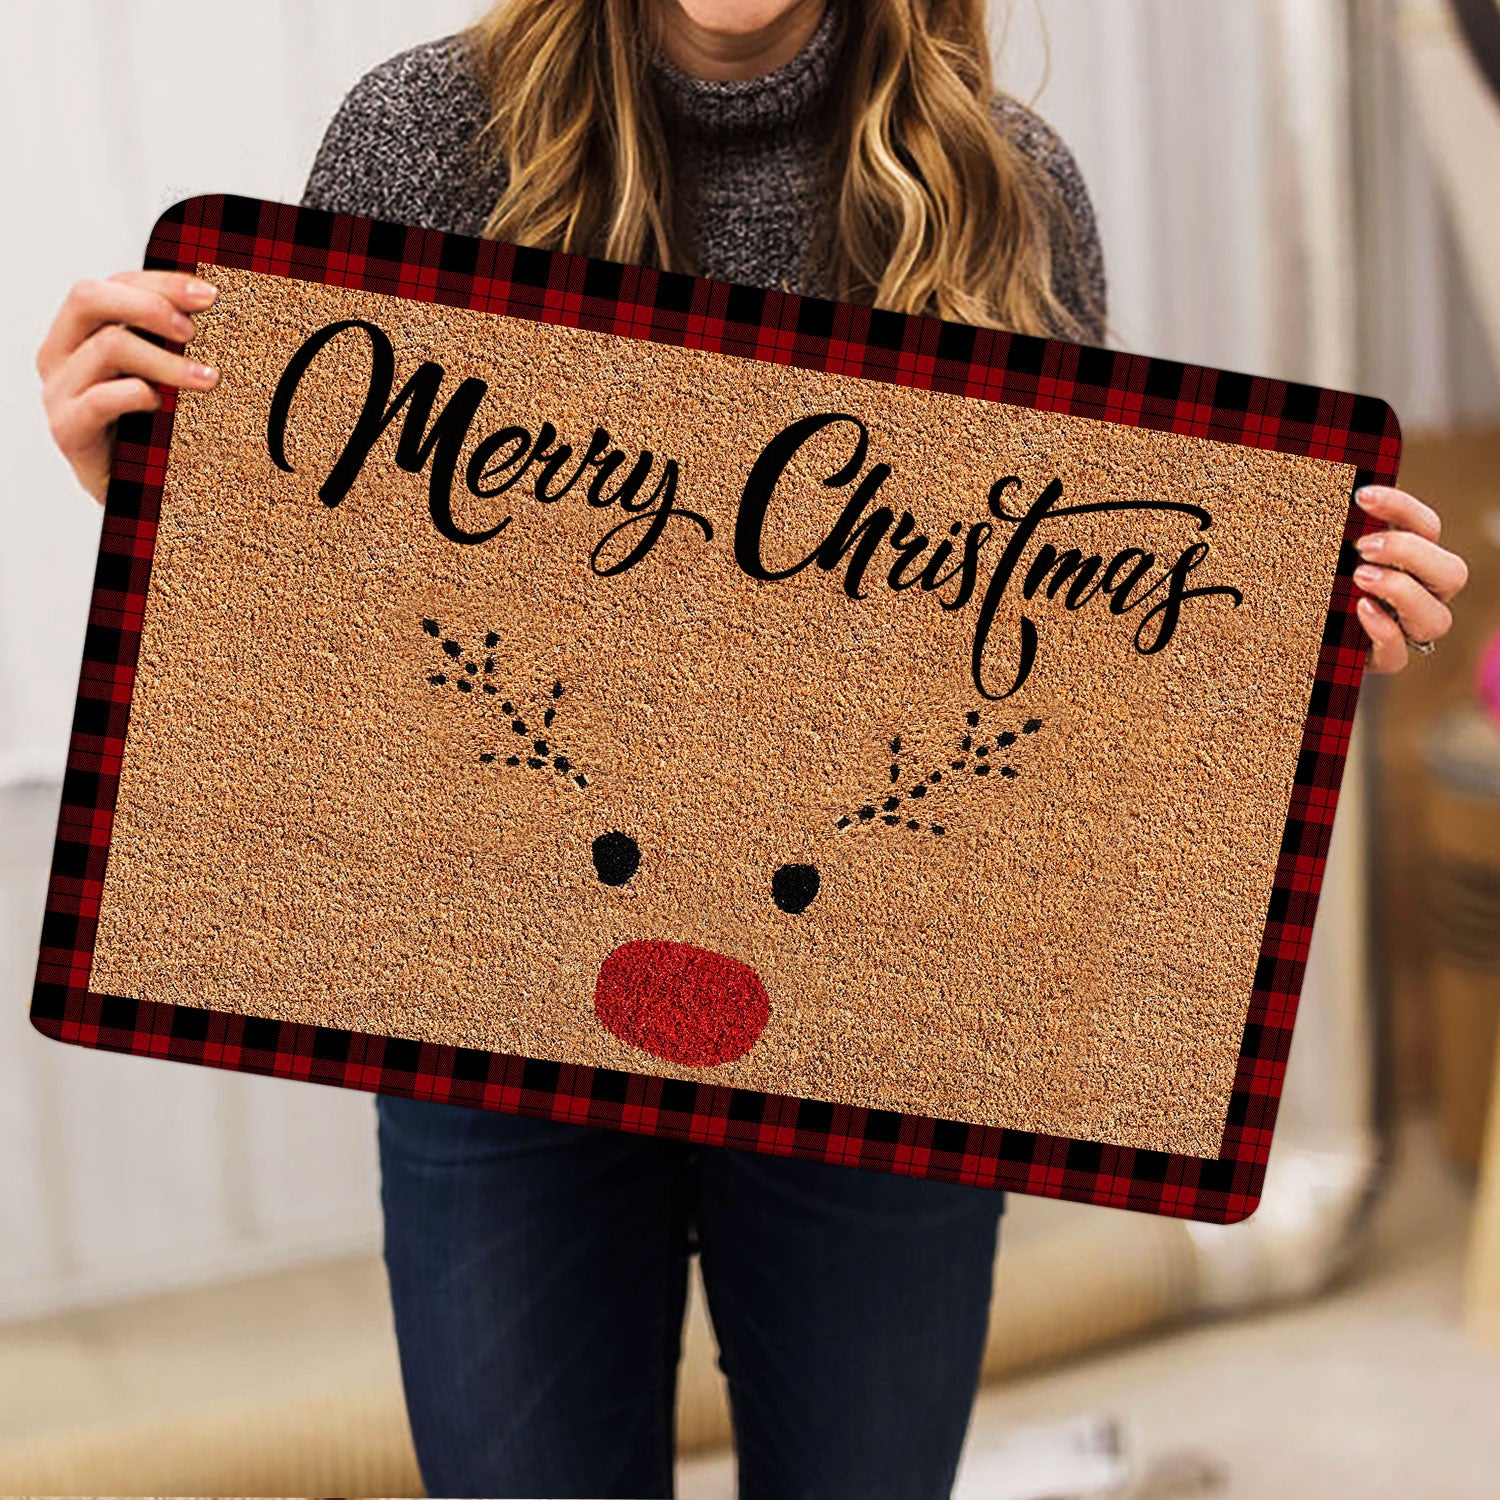 Ohaprints-Doormat-Outdoor-Indoor-Merrry-Christmas-Rudolph-Red-Buffalo-Plaid-Xmas-Winter-Holiday-Rubber-Door-Mat-2014-